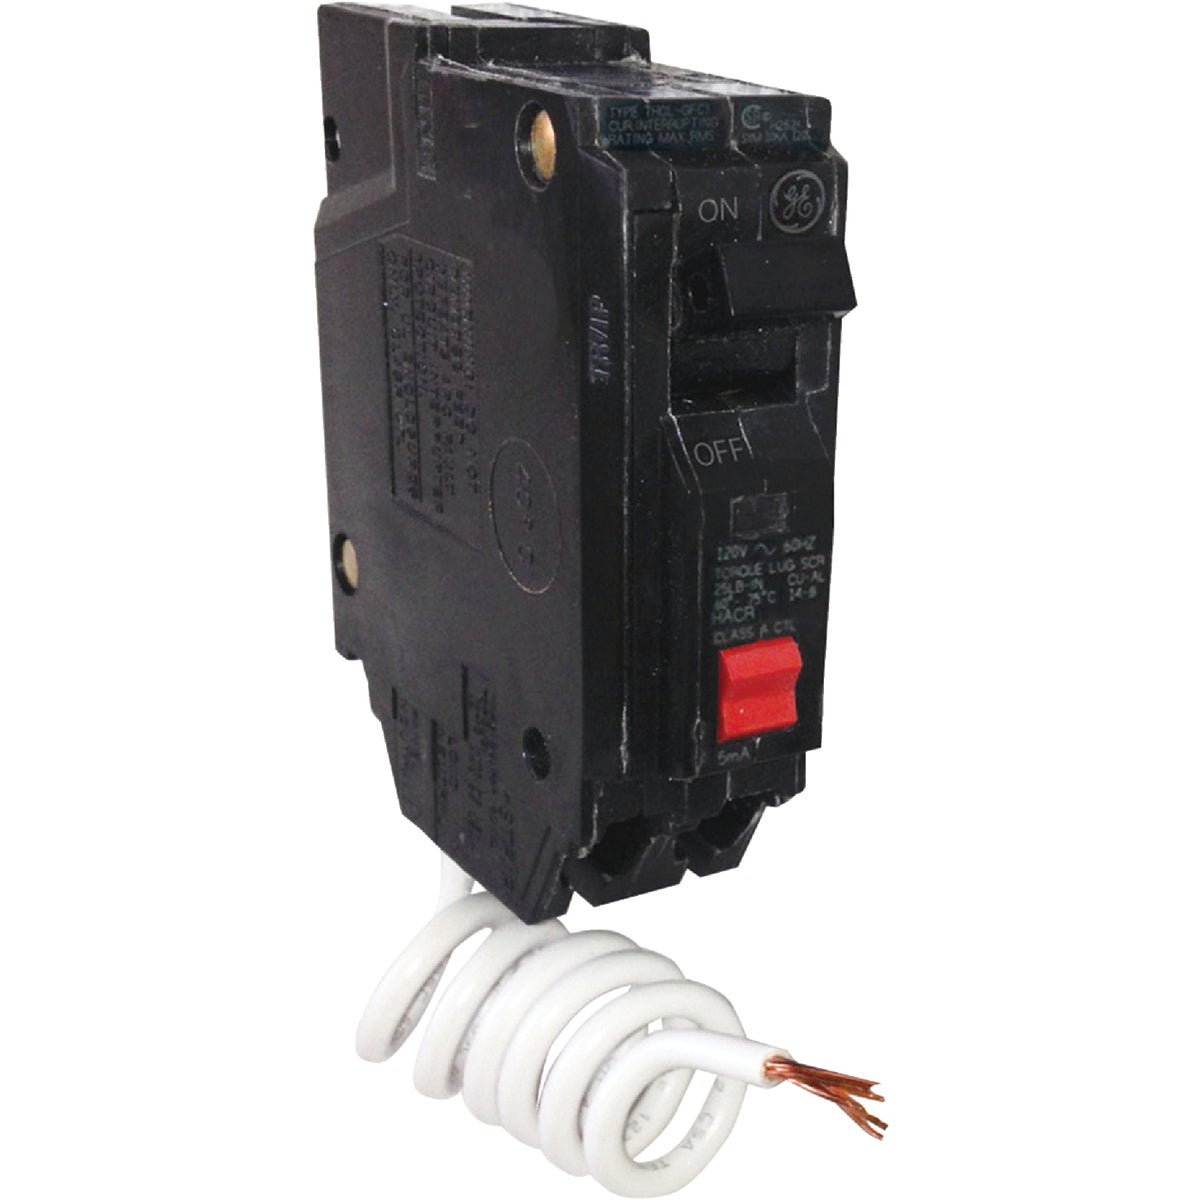 Item 519022, Single-pole GFCI (ground fault circuit interrupter) circuit breaker with 